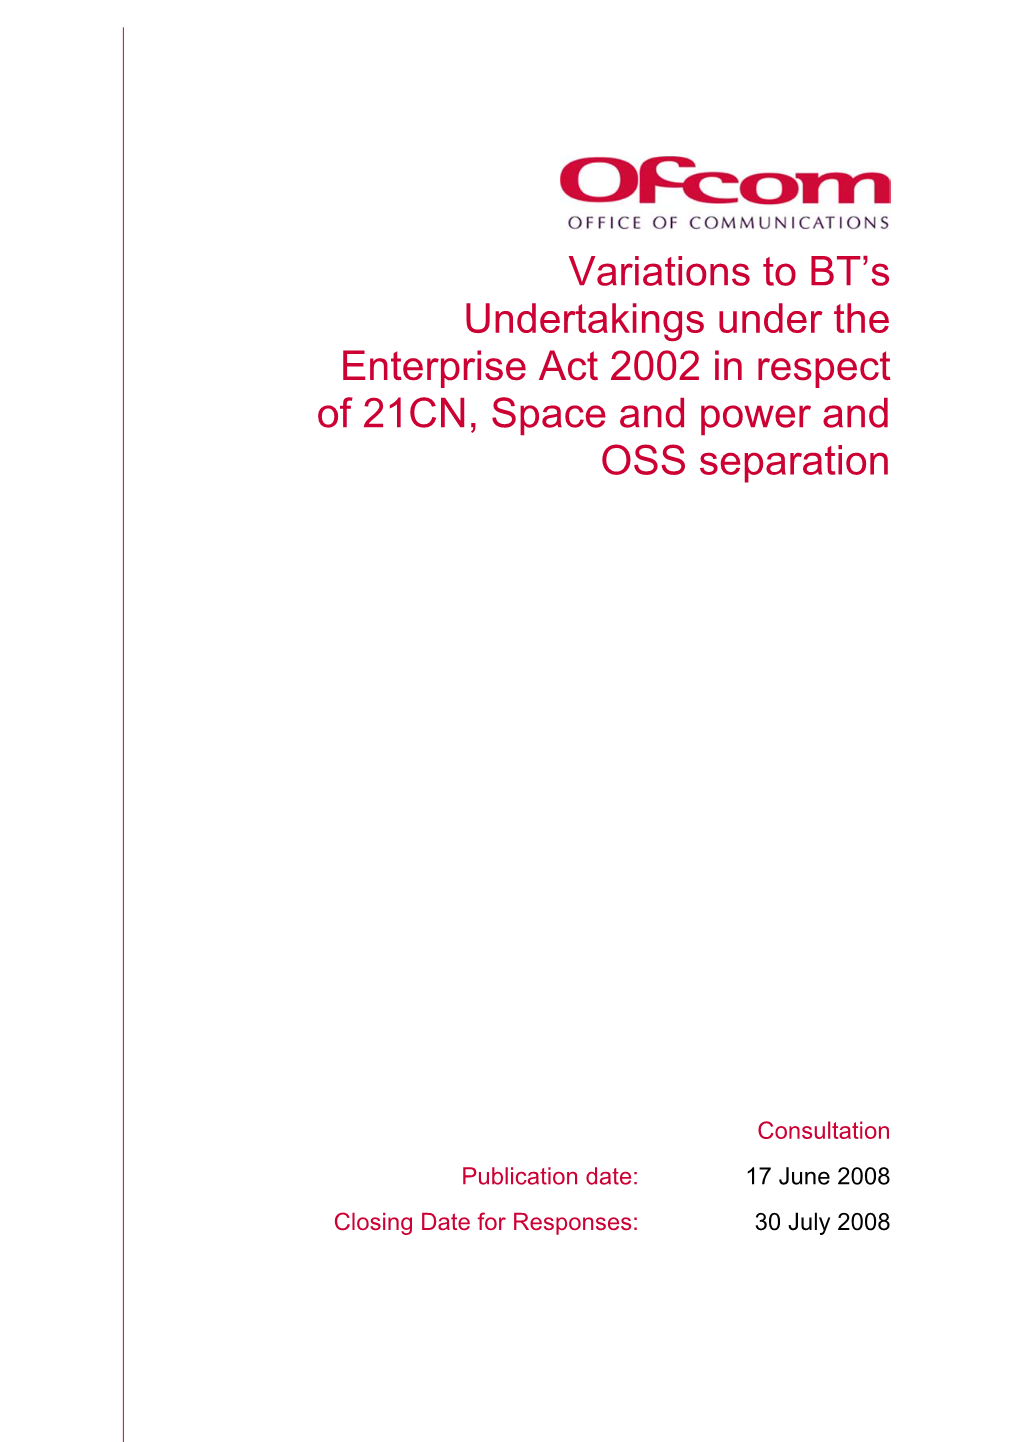 Variations.Pdf (PDF File, 157.3